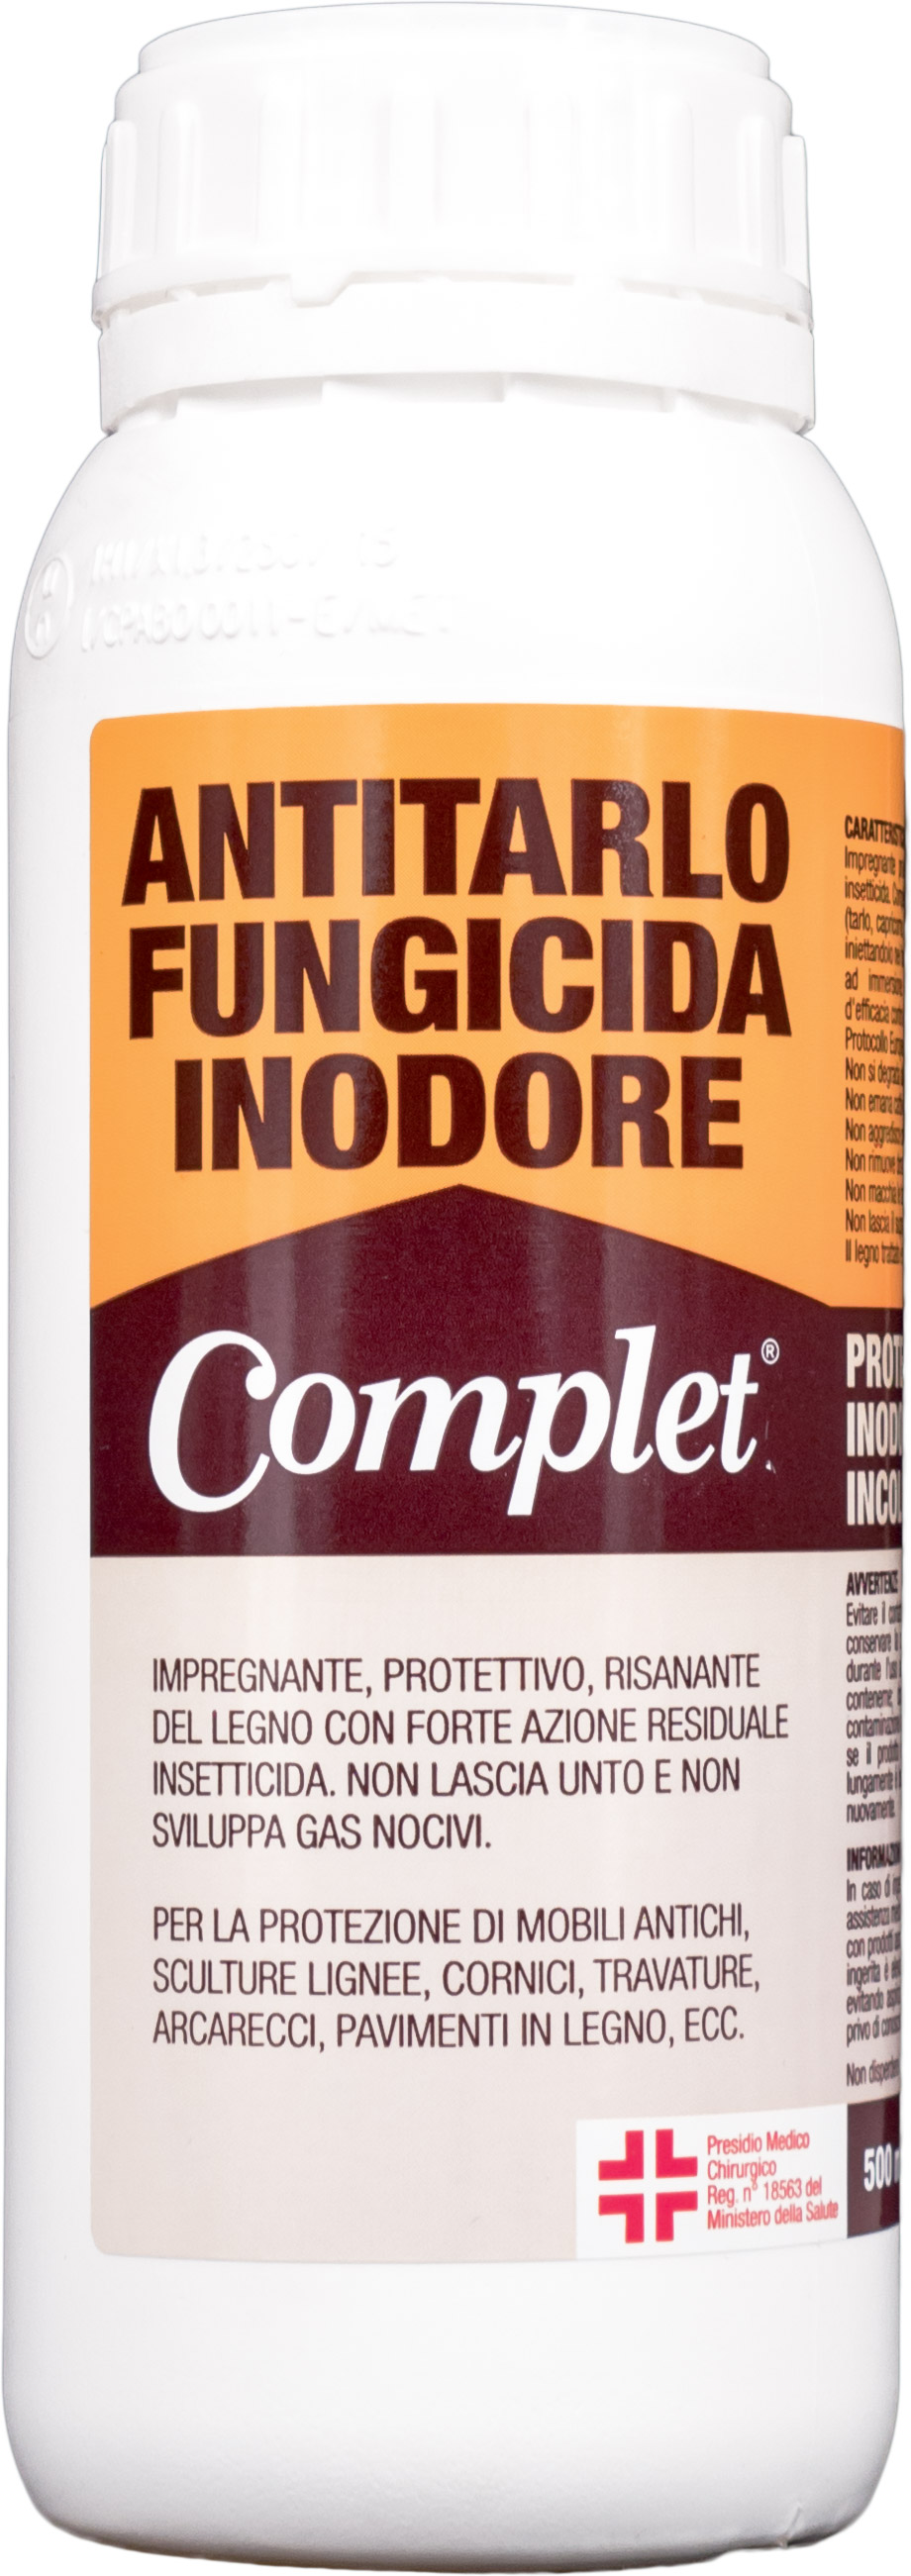 Complet - Antitarlo Fungicida